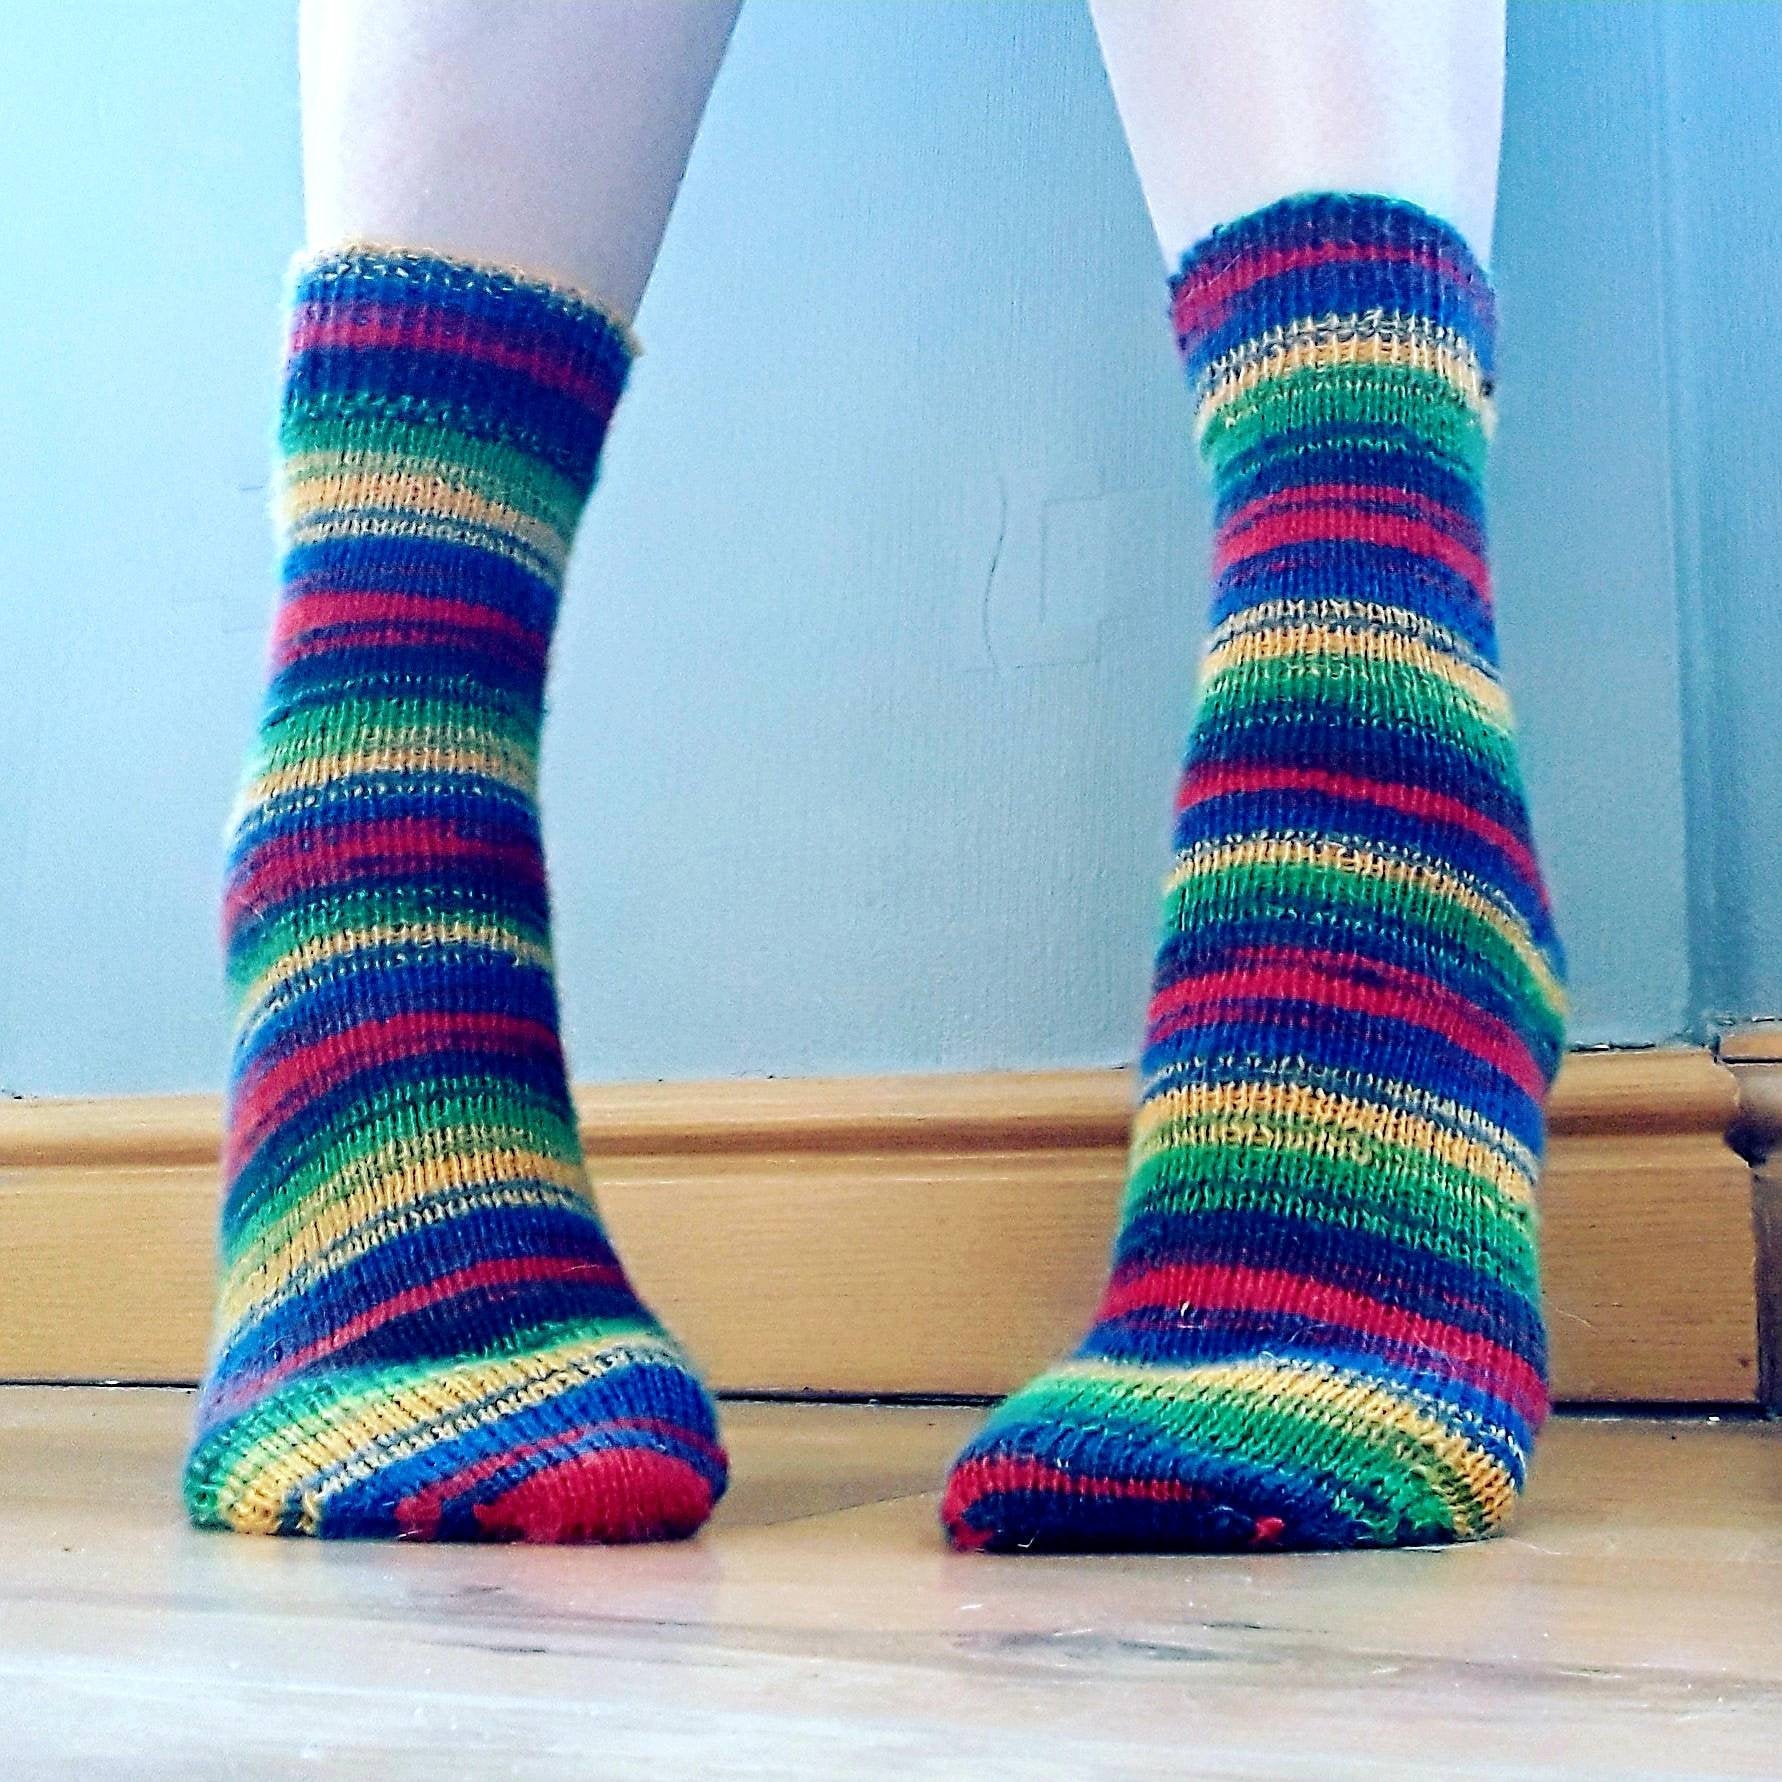 Basic 4ply sock knitting pattern. 